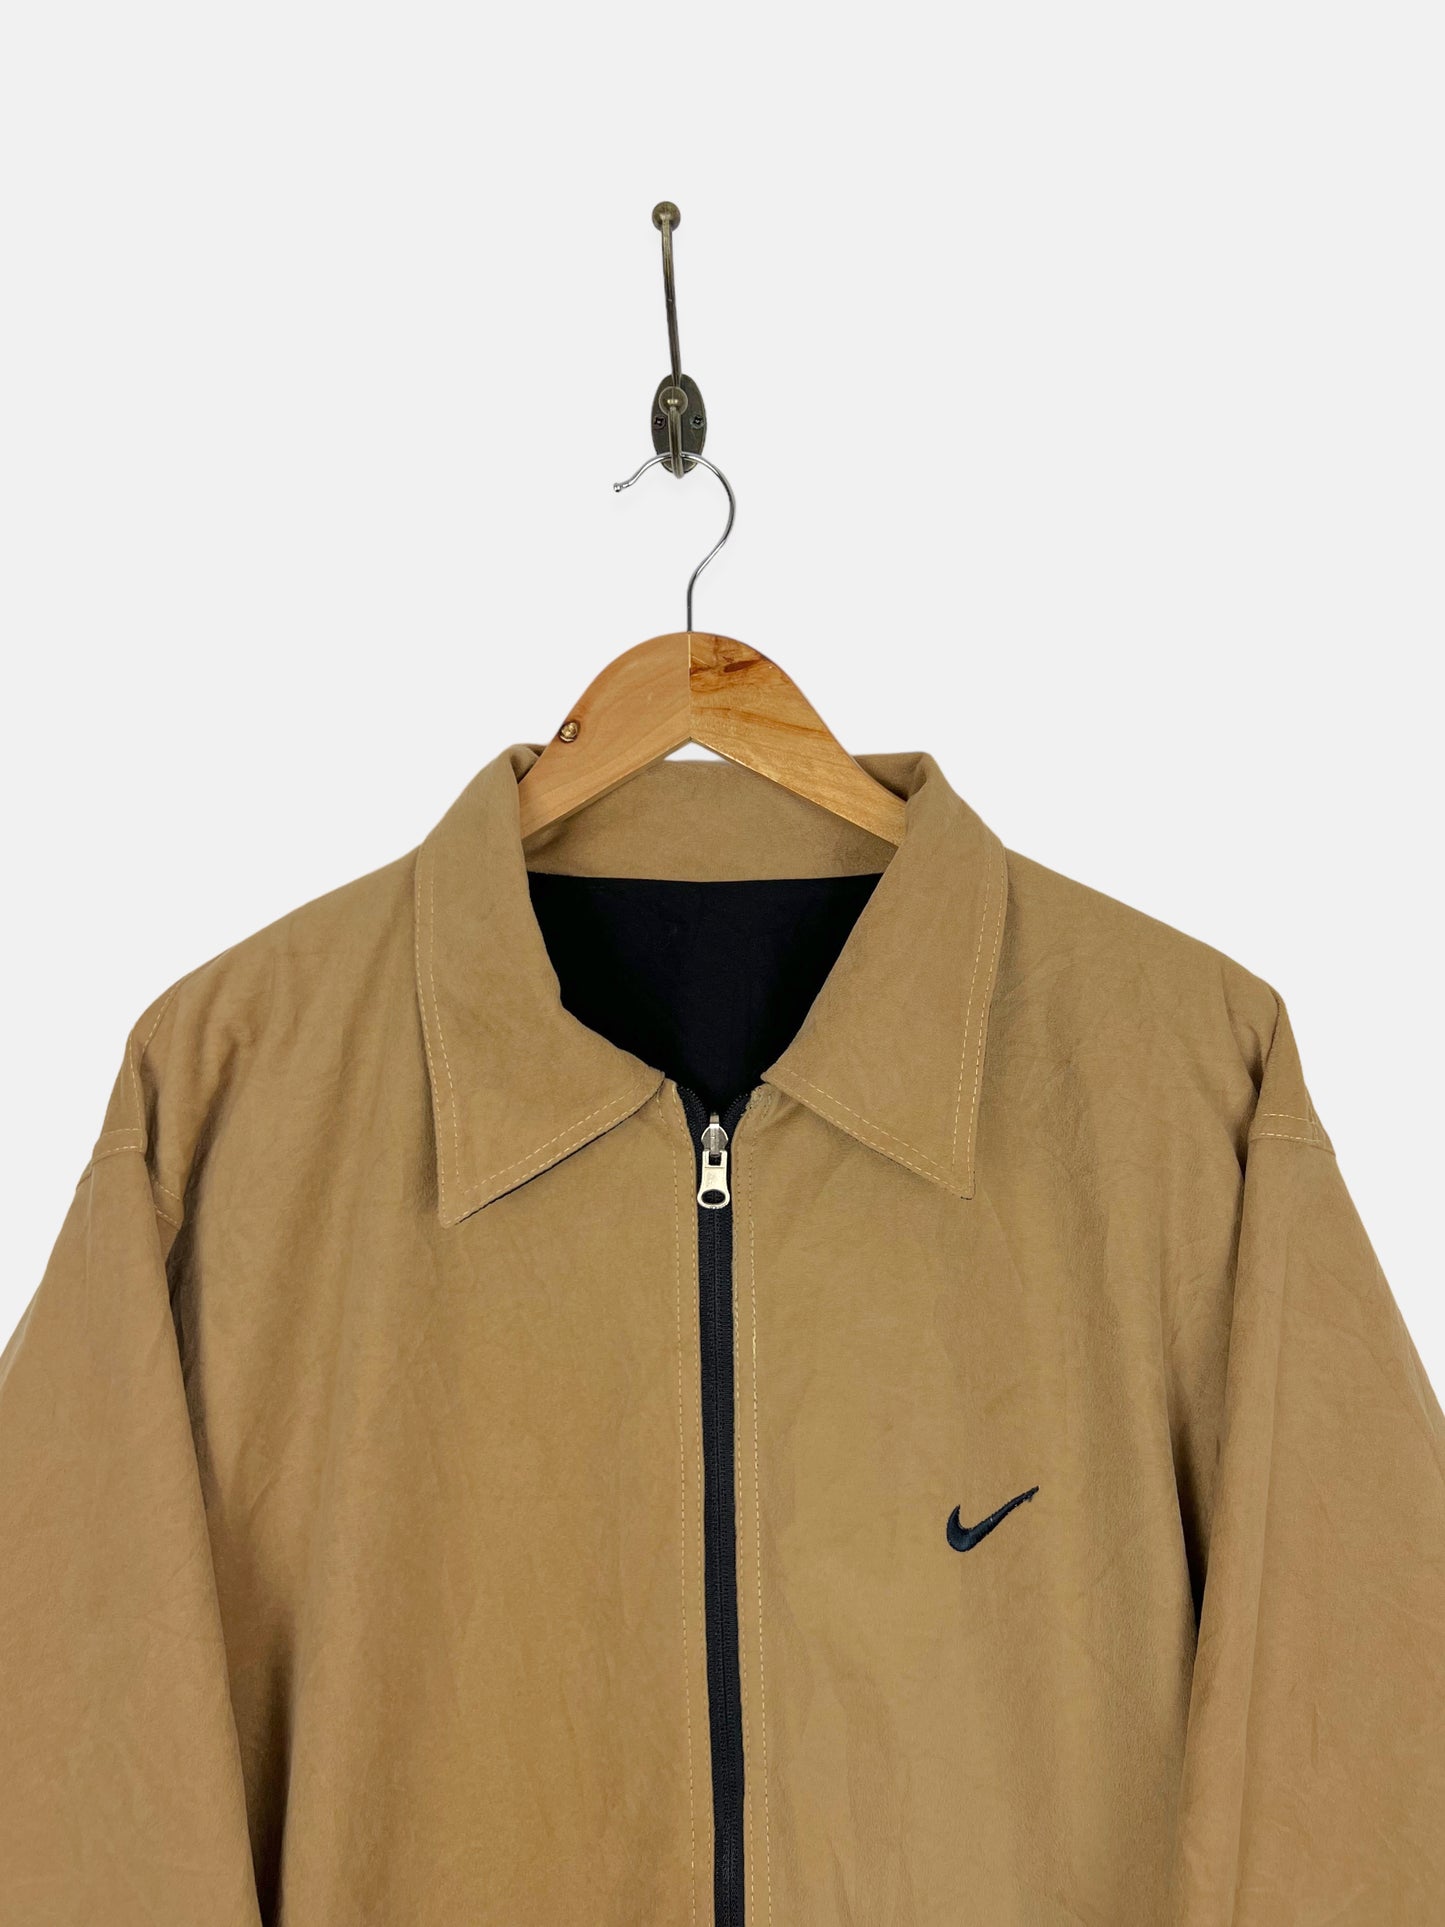 90's Reversible Nike Embroidered Vintage Jacket Size L-XL